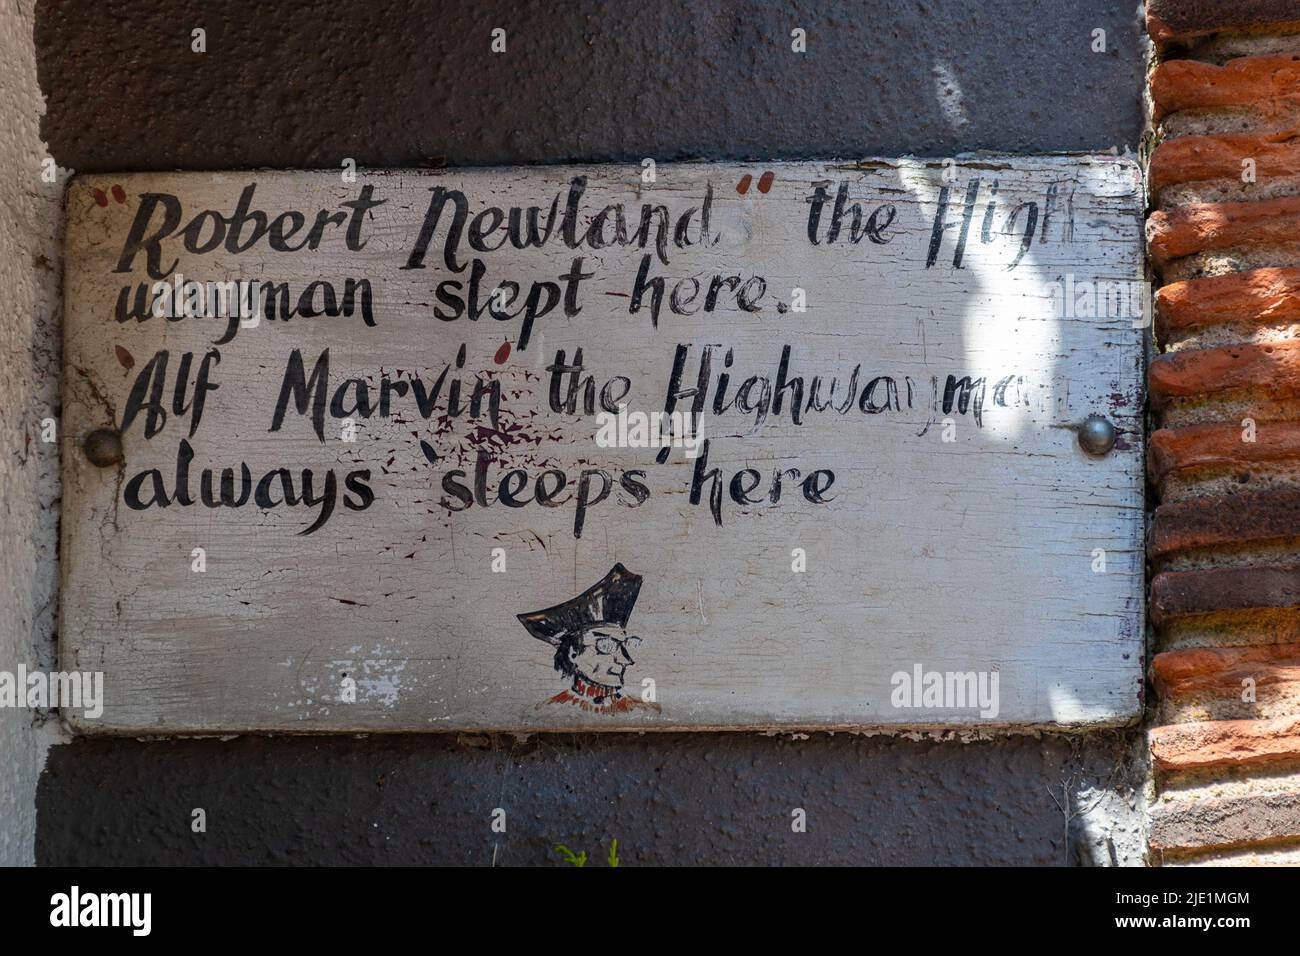 The Bulls Head pub in West Clandon village, Surrey, England, UK. Sign stating Robert Newland the highwayman slept here. Stock Photo